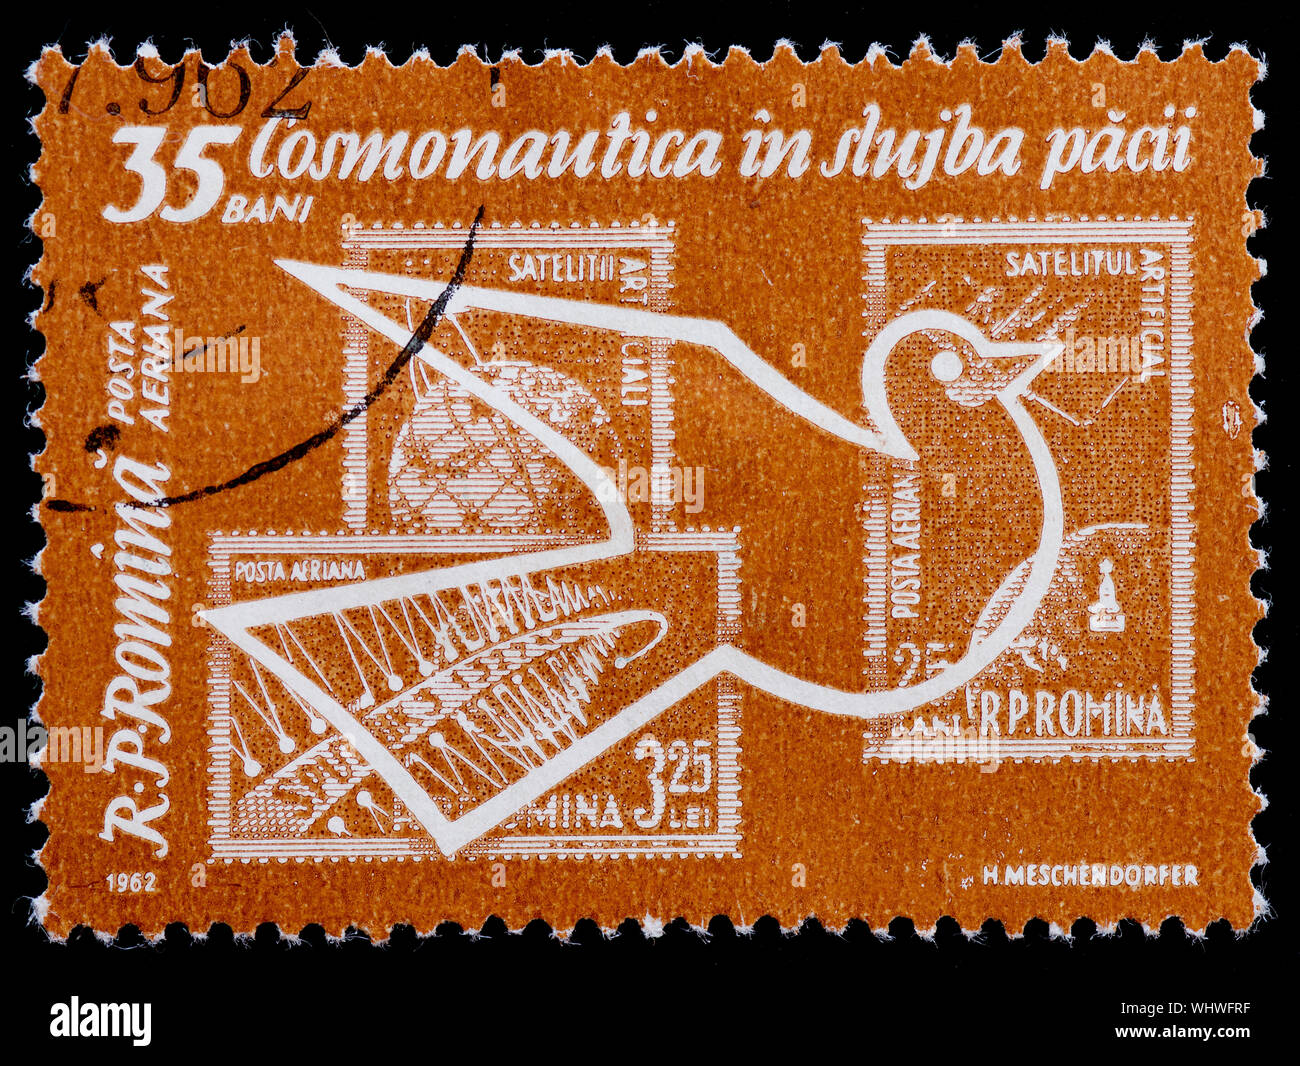 Romania Postage Stamp - Dove and Space Exploration Stock Photo - Alamy